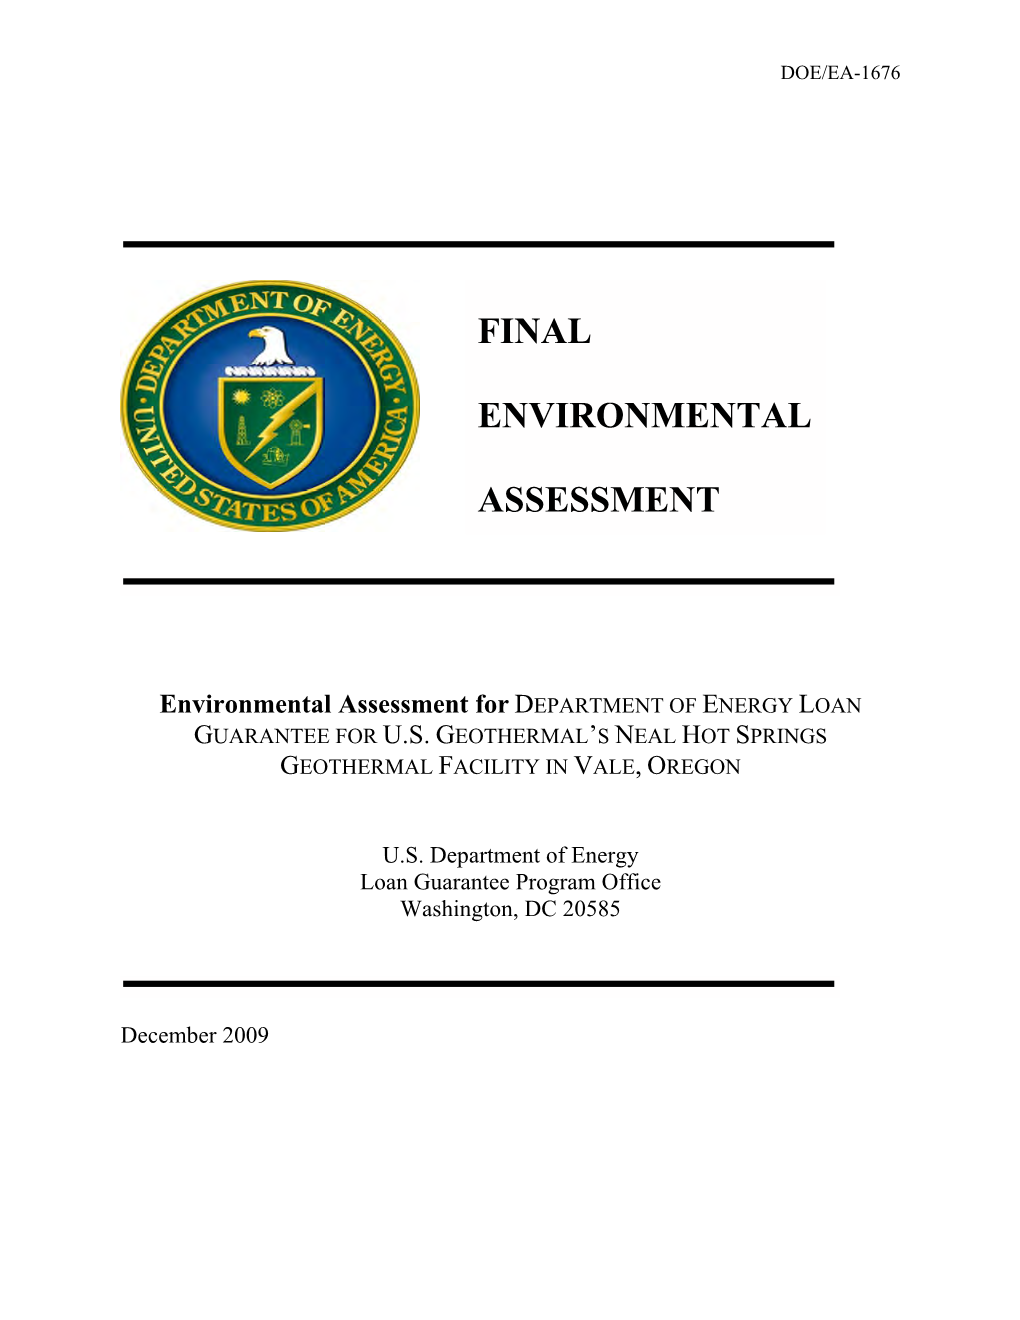 DOE/EA-1676: Final Environmental Assessment for Department Of